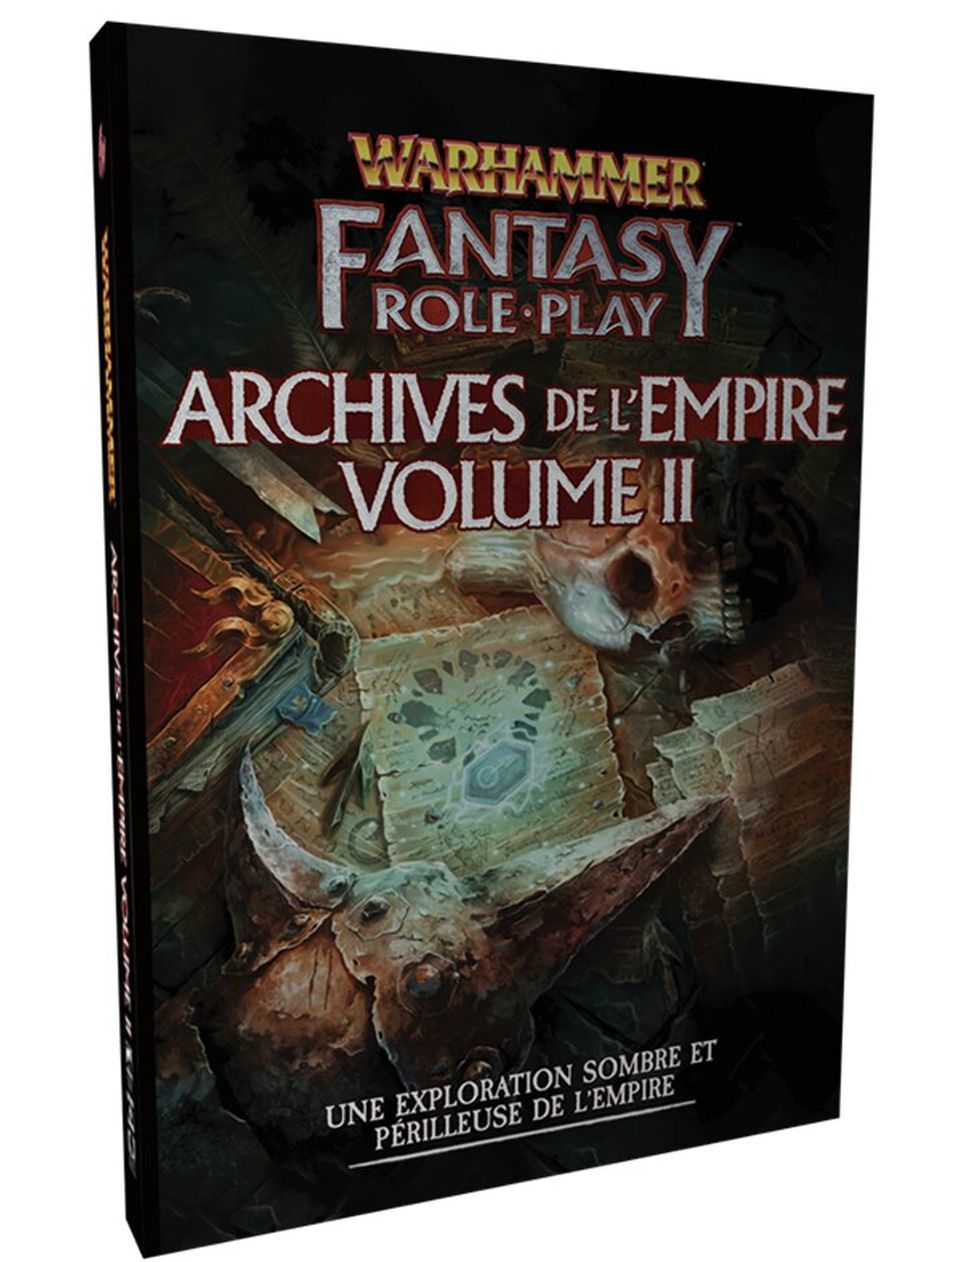 Warhammer Fantasy Roleplay : Archives de l'Empire Vol. II image